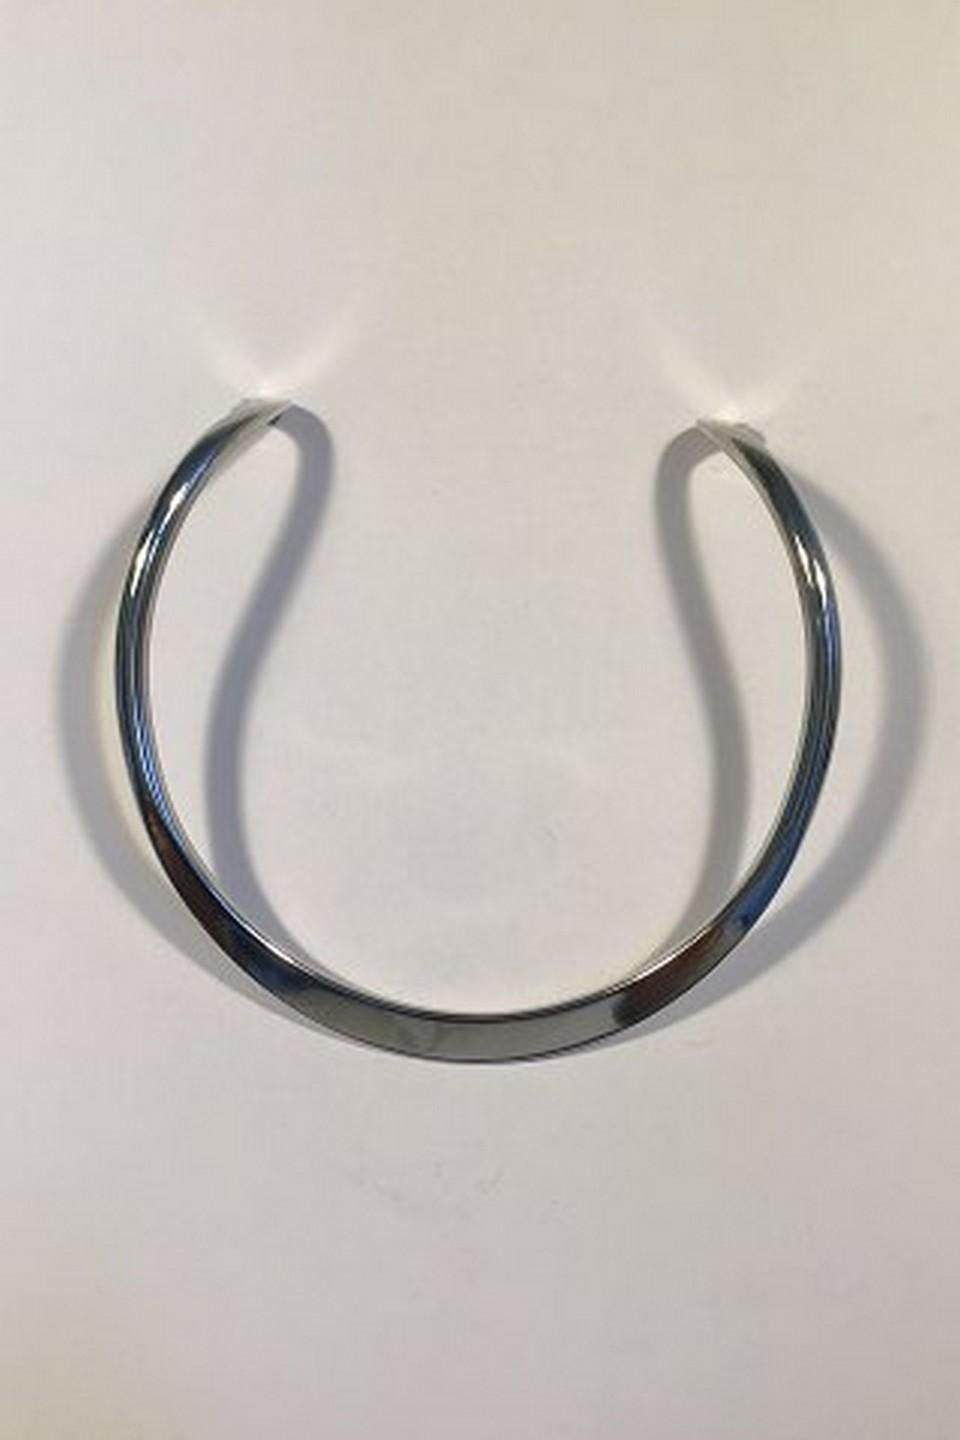 Georg Jensen Sterling Silver Neck Ring No 9A Design Ove Wendt Measures (on the inside) 11 cm x 12 cm/4.33